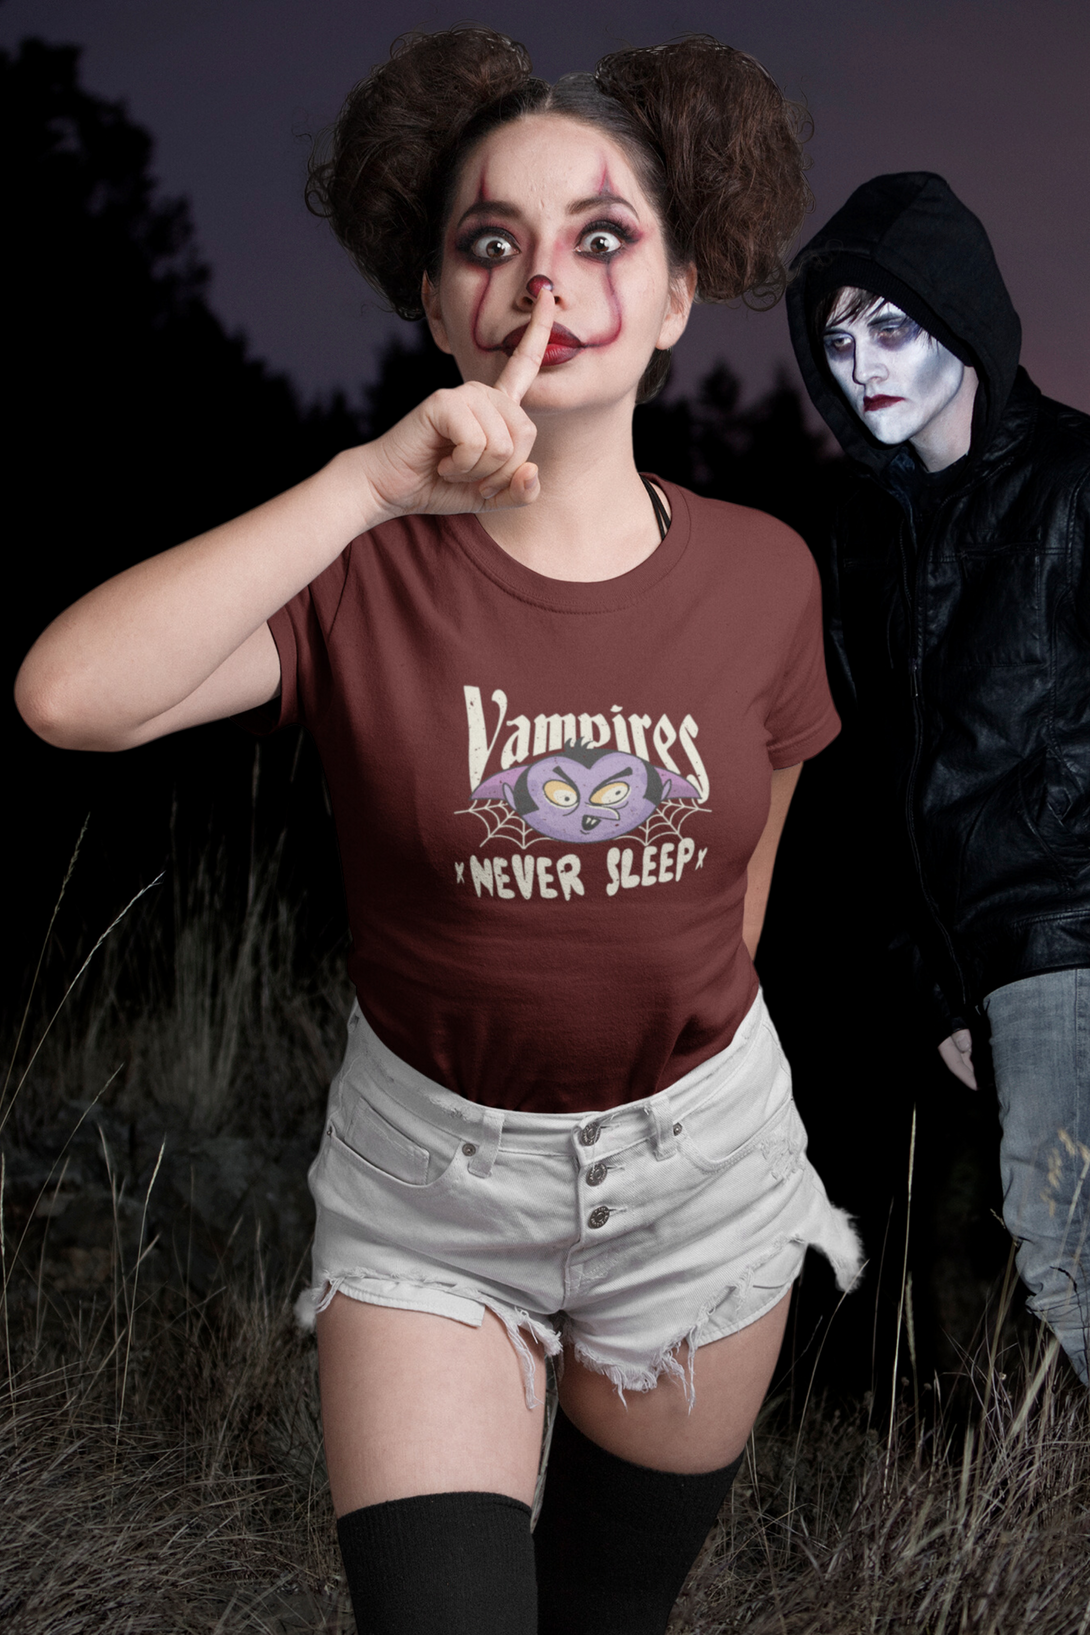 Vampires Never Sleep Printed T-Shirt For Women - WowWaves - 2